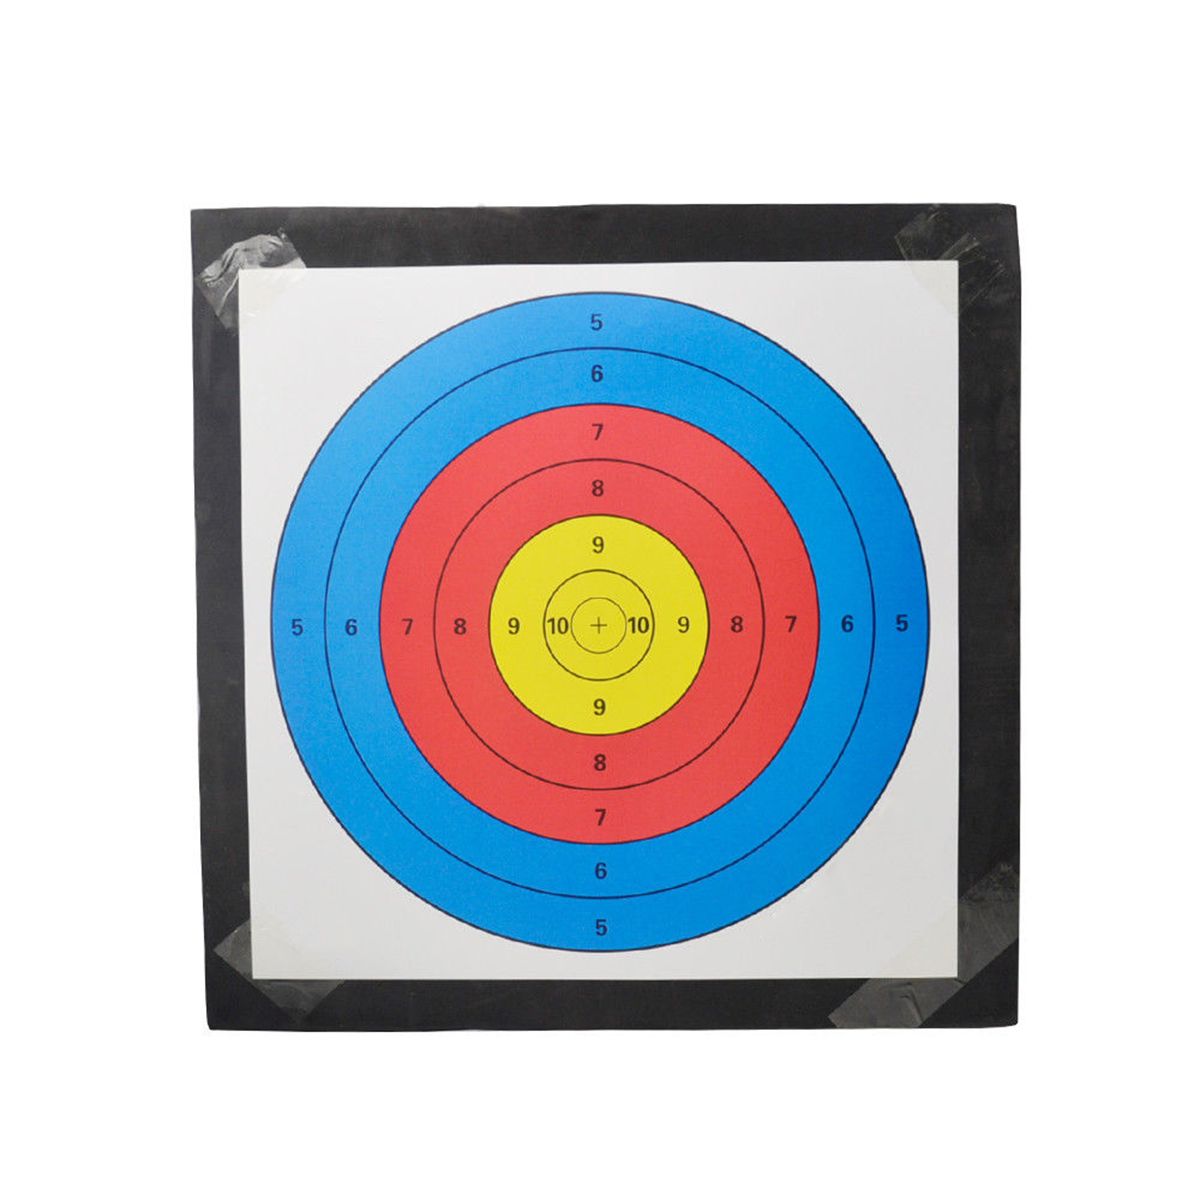 50X50X5cm-Bow-Arrows-Gauge-Training-Archery-Targets-Beginner-Shooting-Target-For-Hunting-Shooting-Tr-1559656